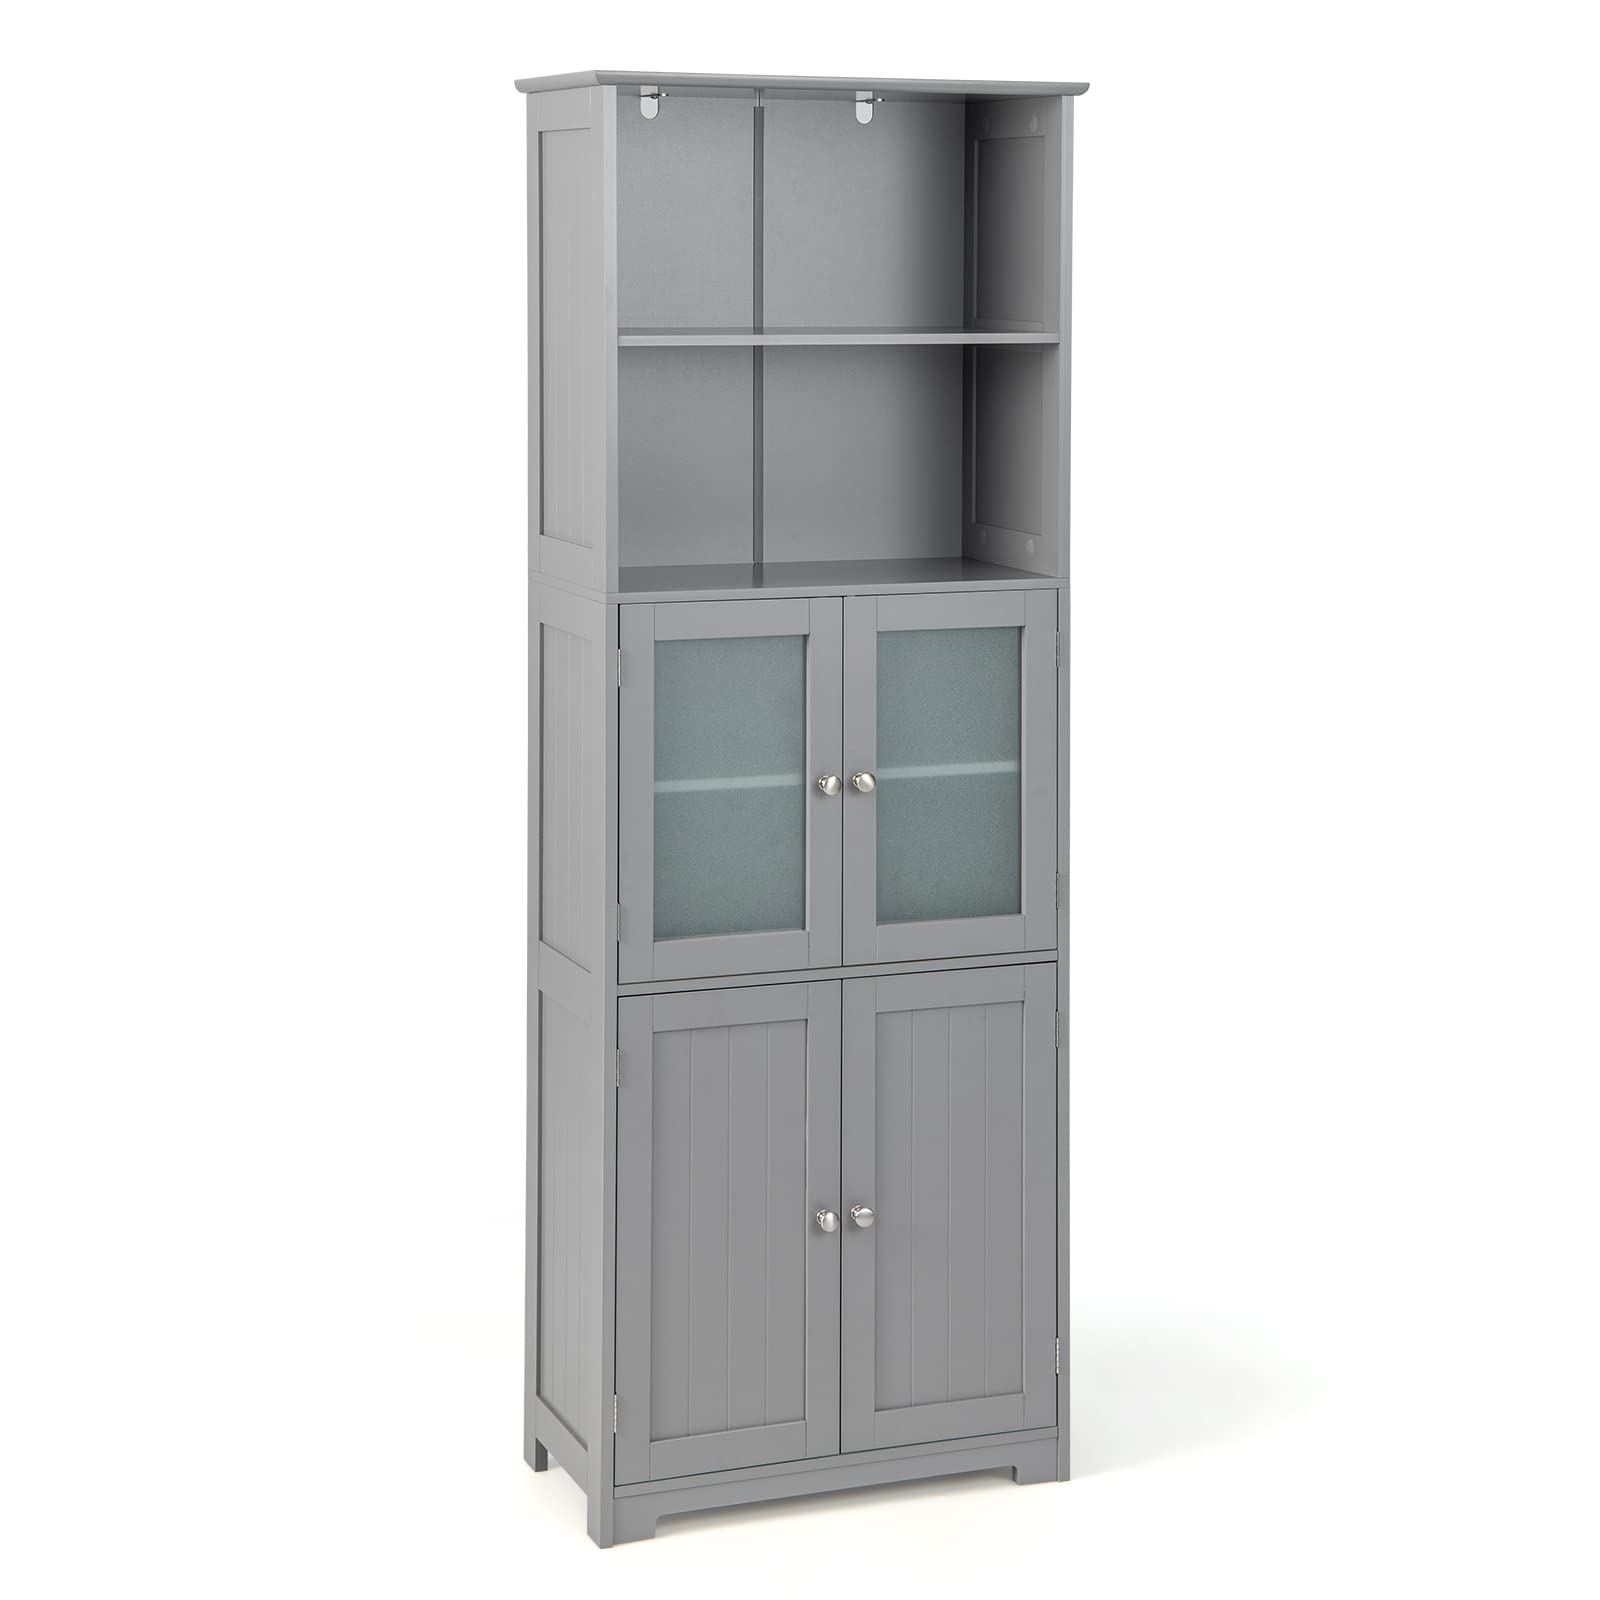 Giantex Large Bathroom Floor Cabinet, Freestanding Multipurpose Storage Cabinet with Drawer, 2 Open Shelves and Door Cupboard for Bathroom, Living